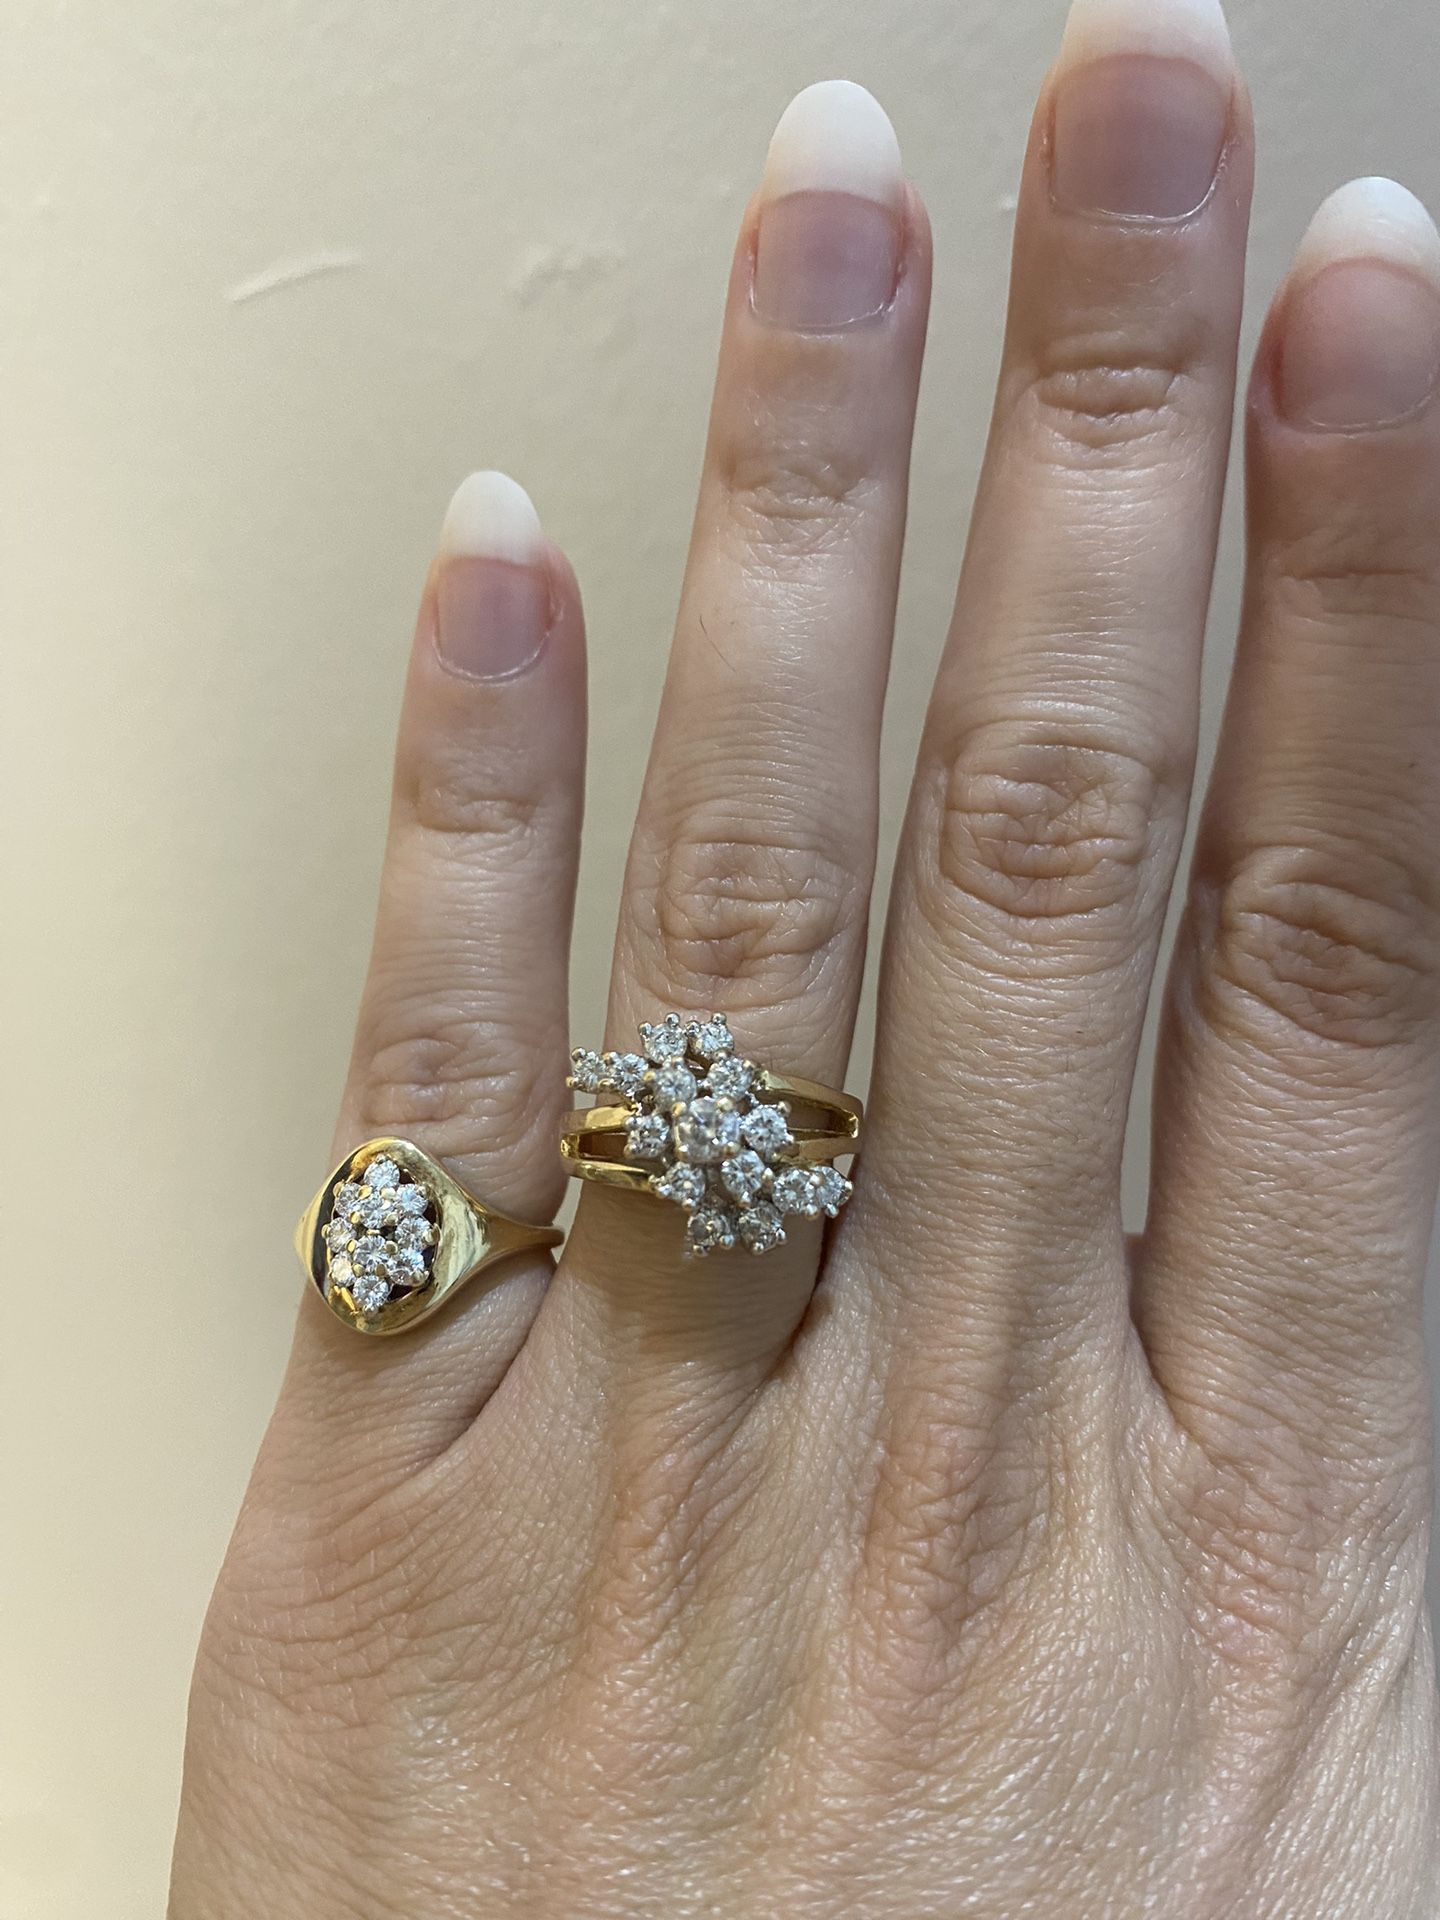 Natural Diamond Rings both are 14k Gold